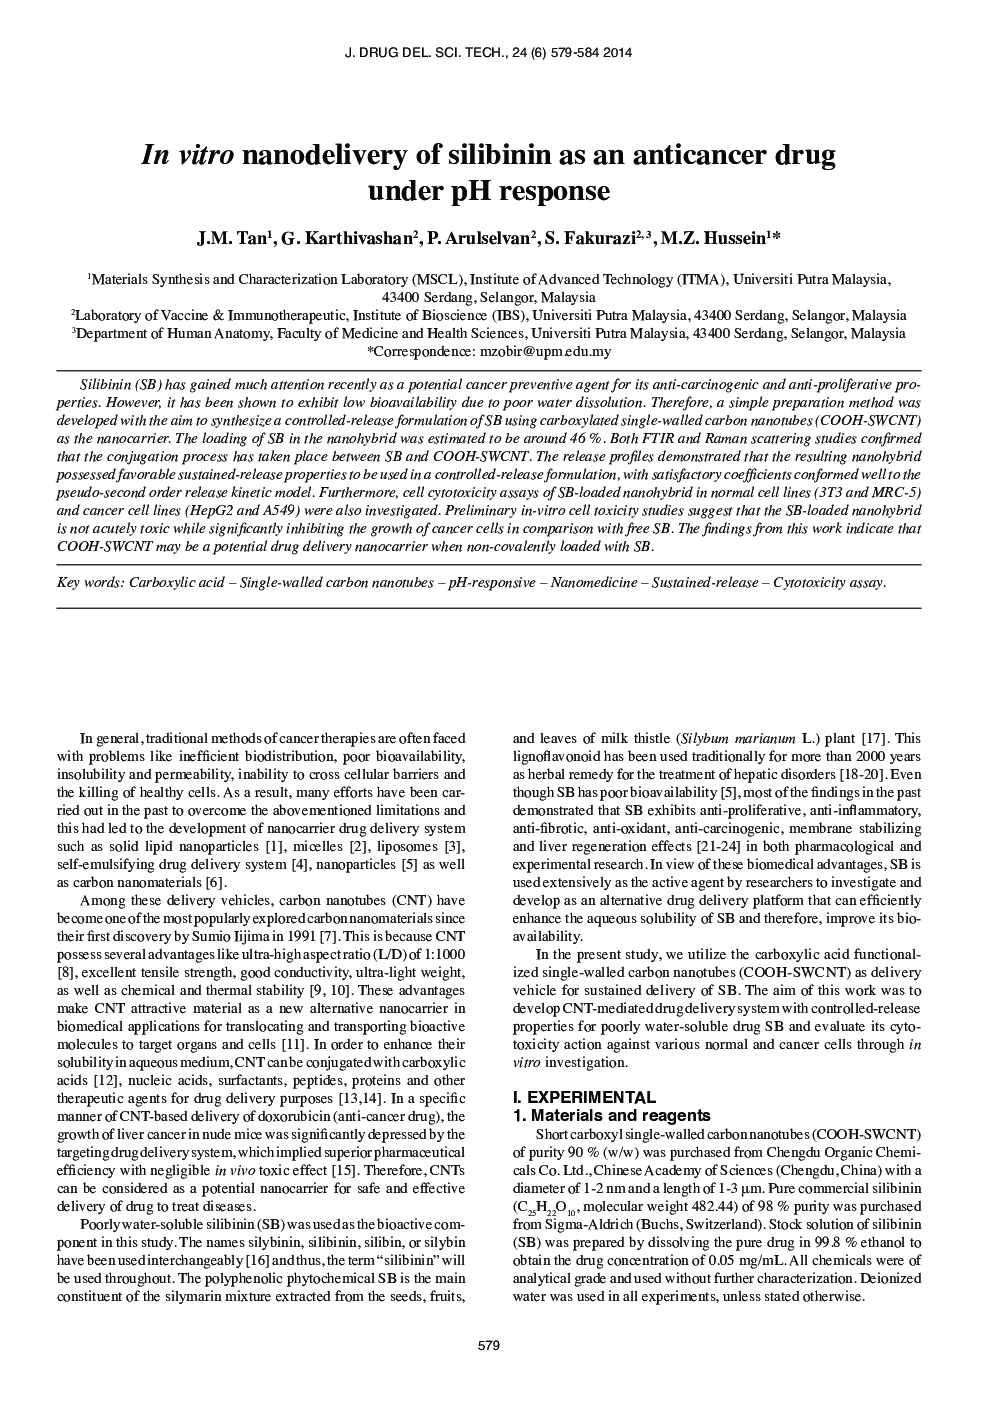 In vitro nanodelivery of silibinin as an anticancer drug under pH response